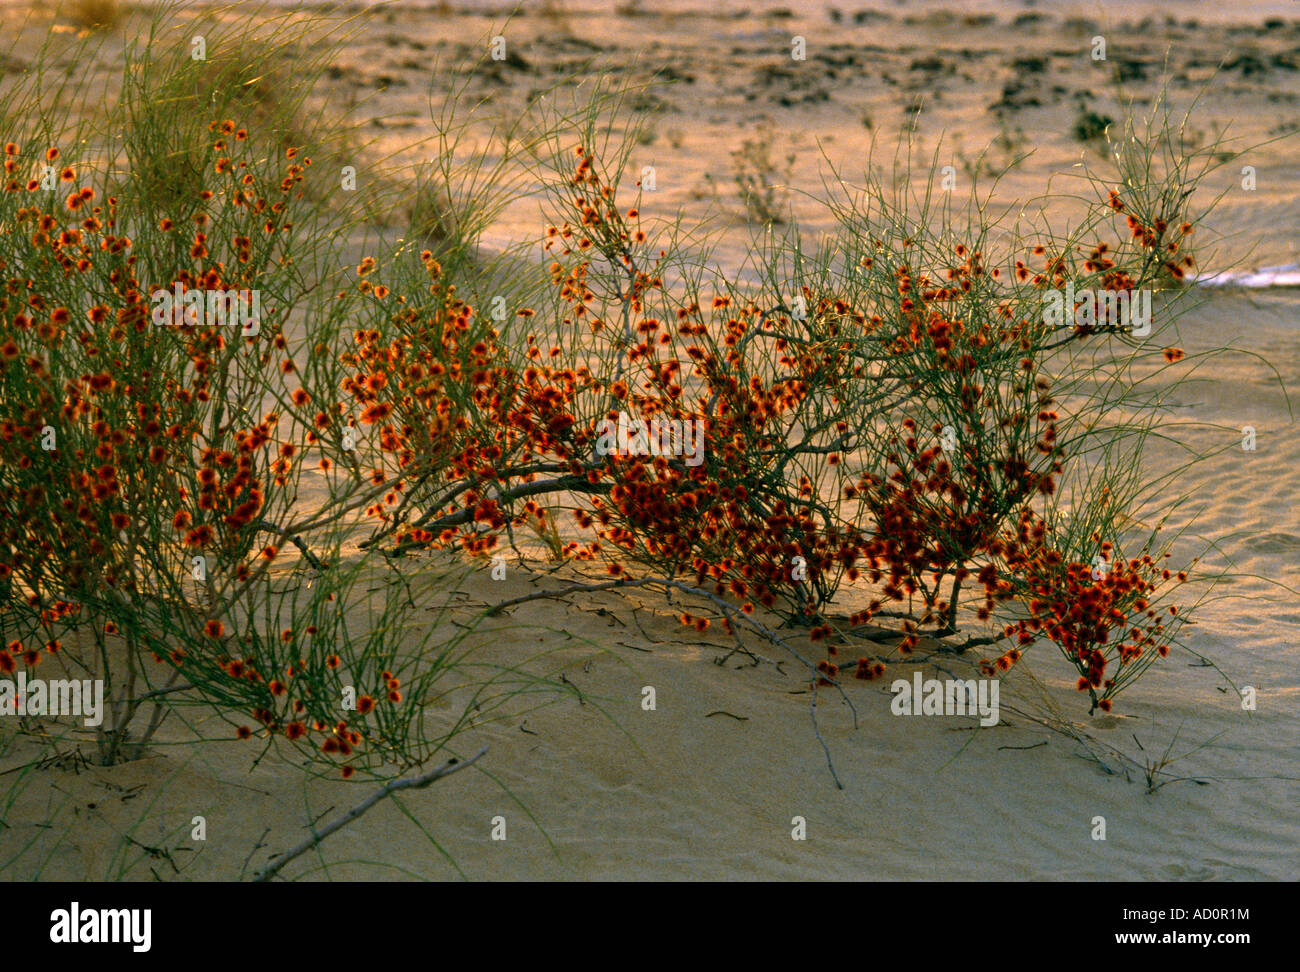 Saudi Arabia Desert Flowers calligonum comosum Helps Stabilize Sand Dunes Stock Photo